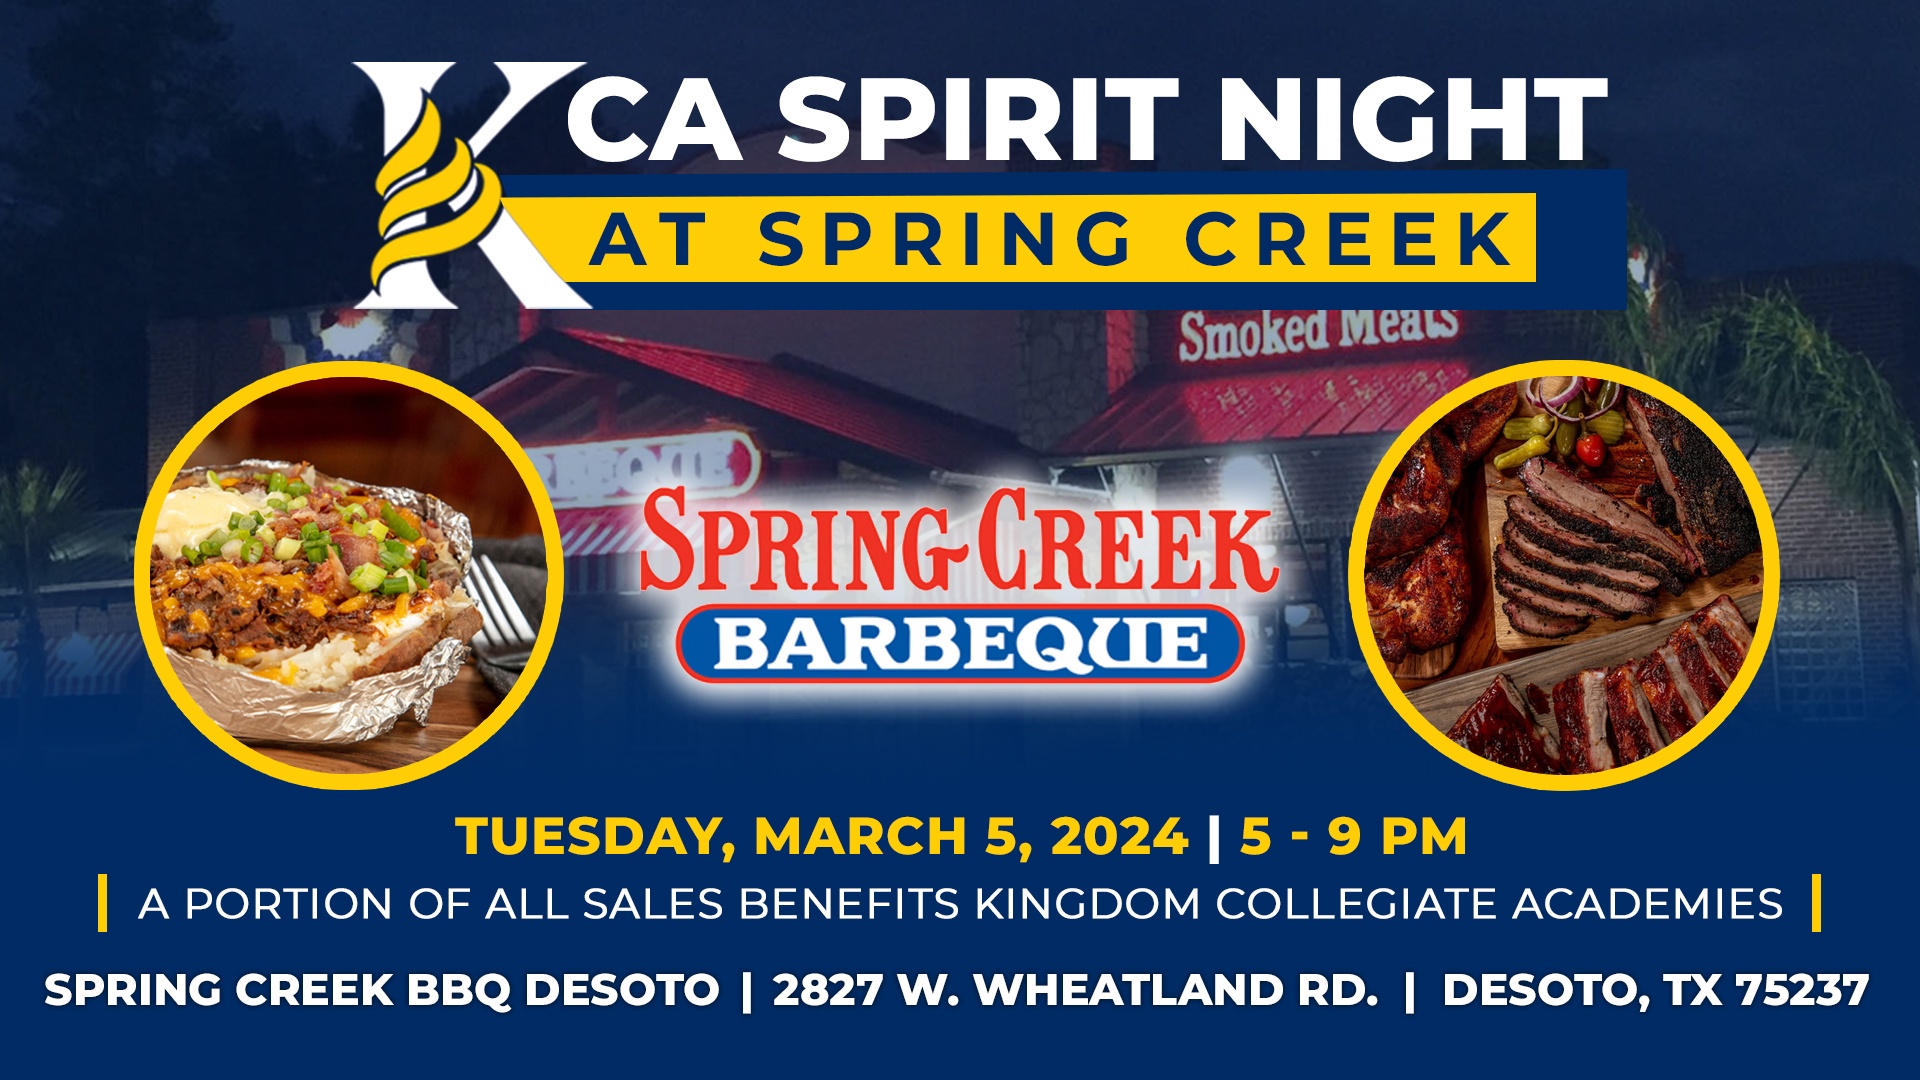 KCA Spirit Night at Spring Creek Barbeque